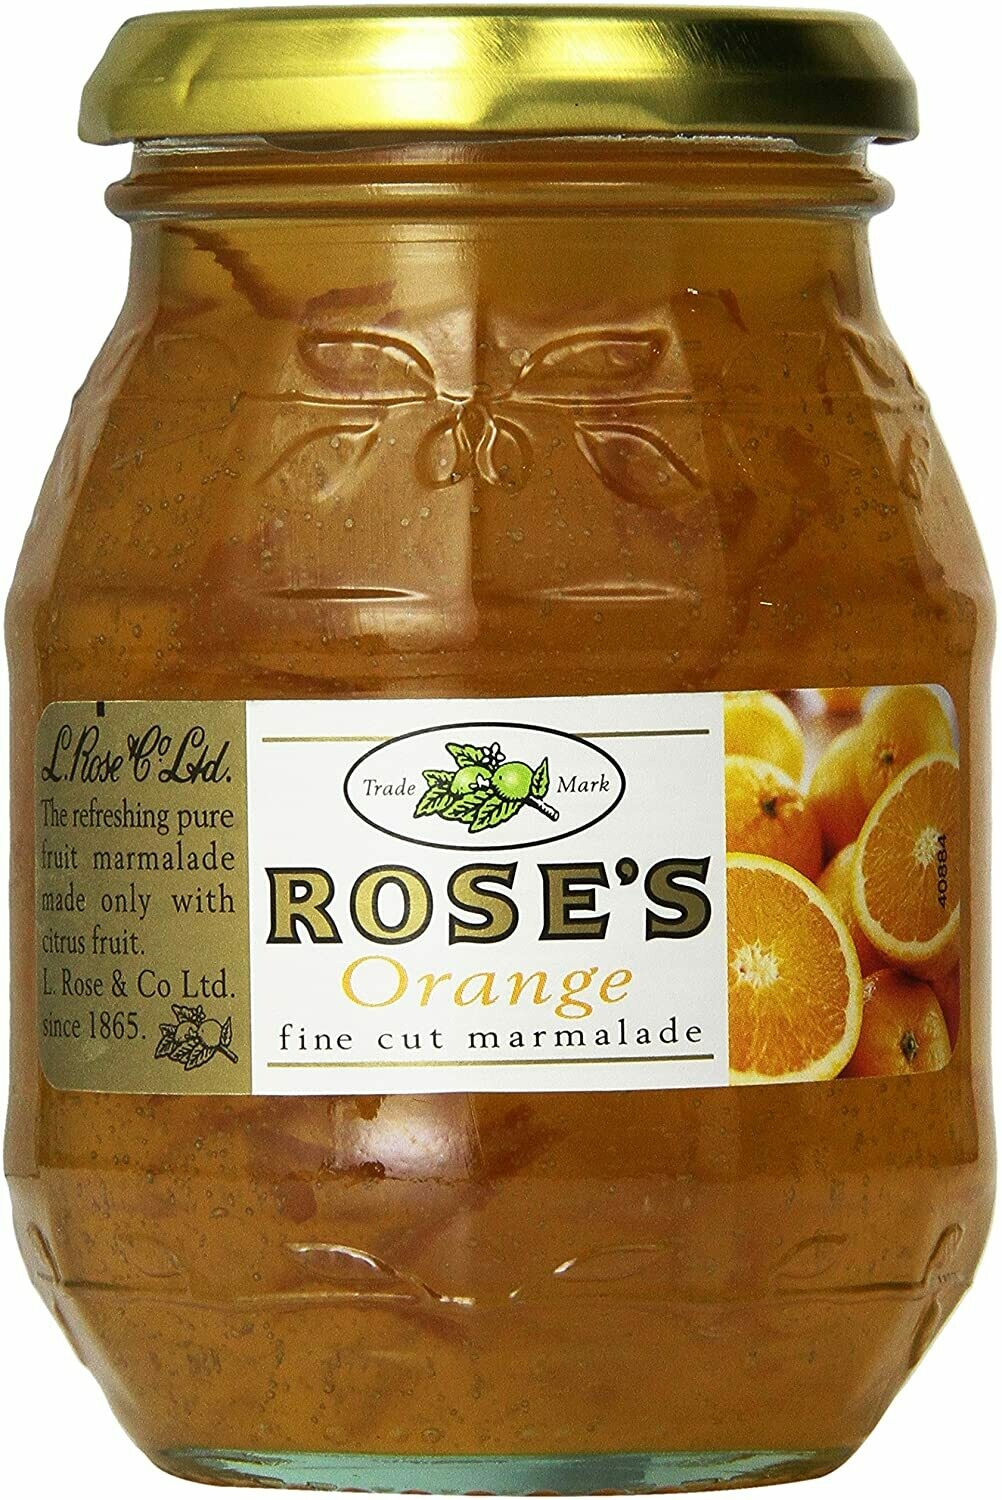 Roses Orange Marmalade 454g